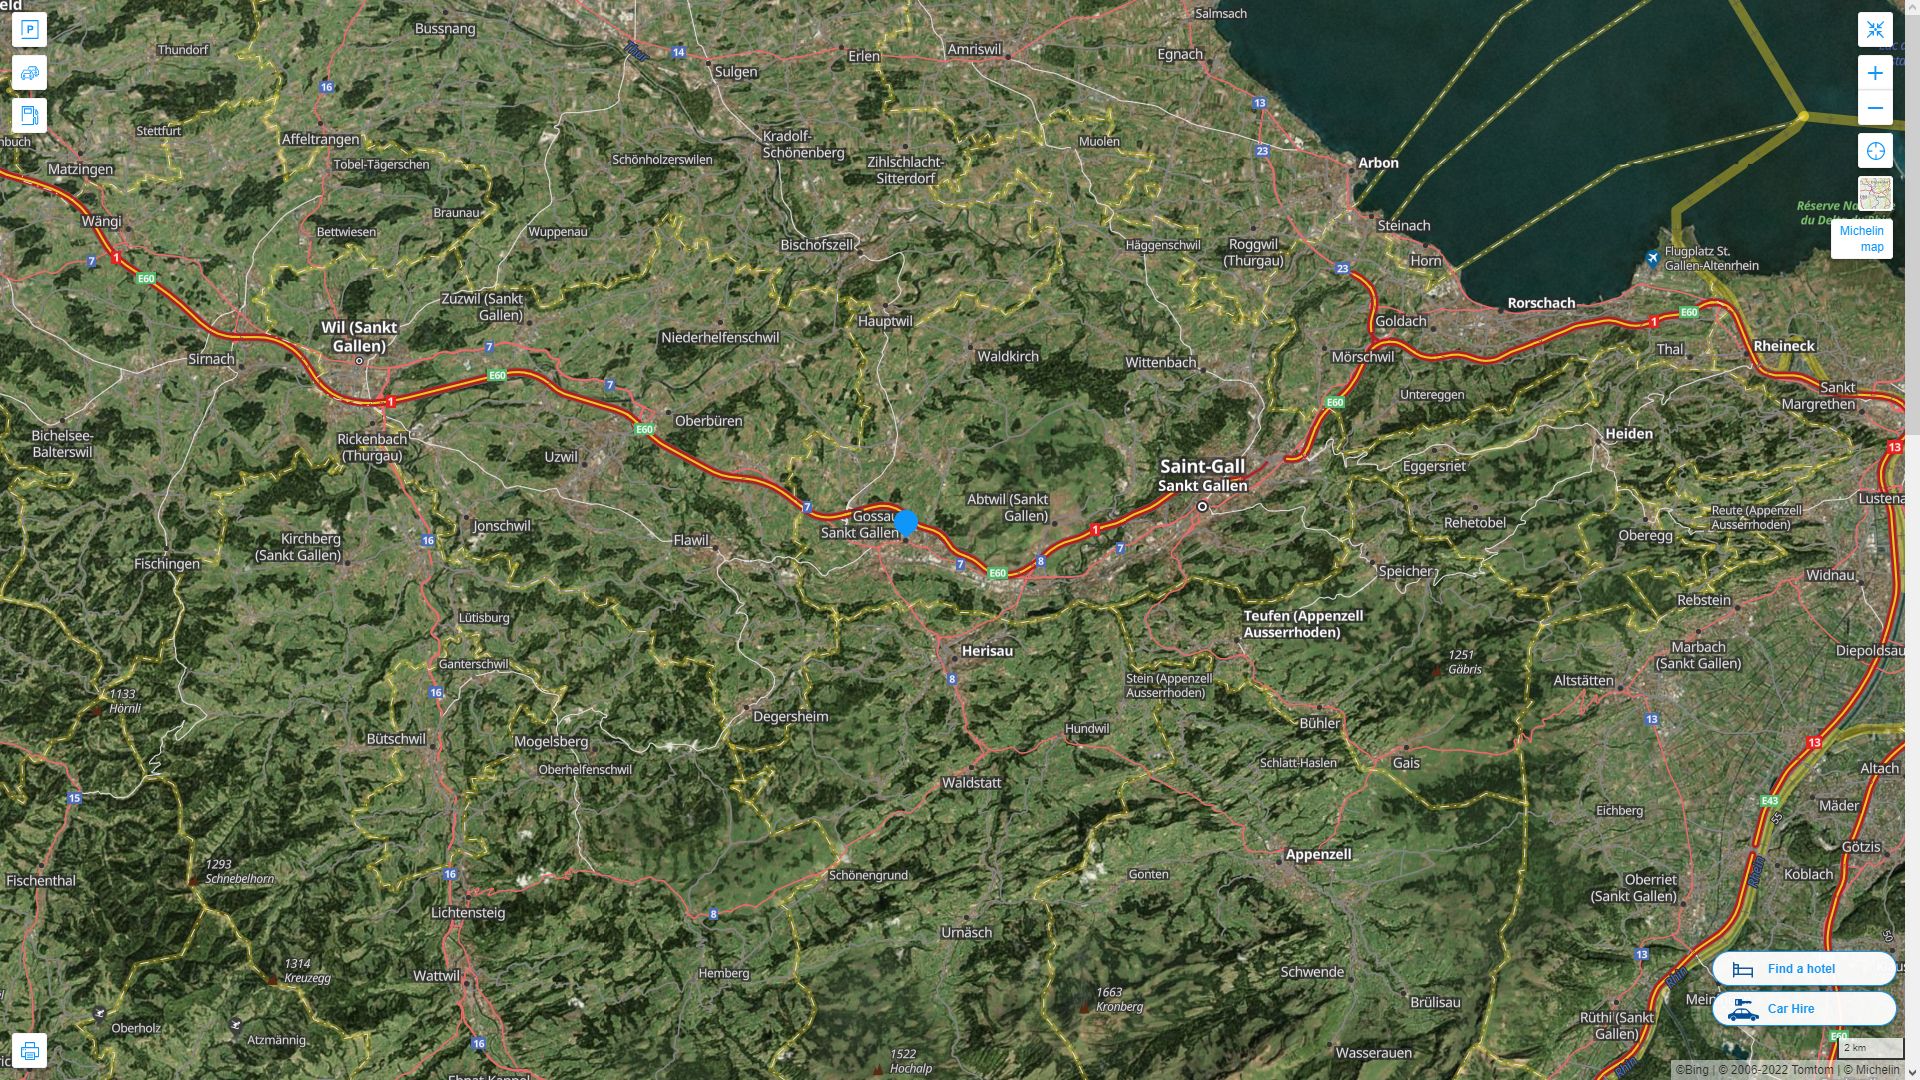 Gossau Suisse Autoroute et carte routiere avec vue satellite